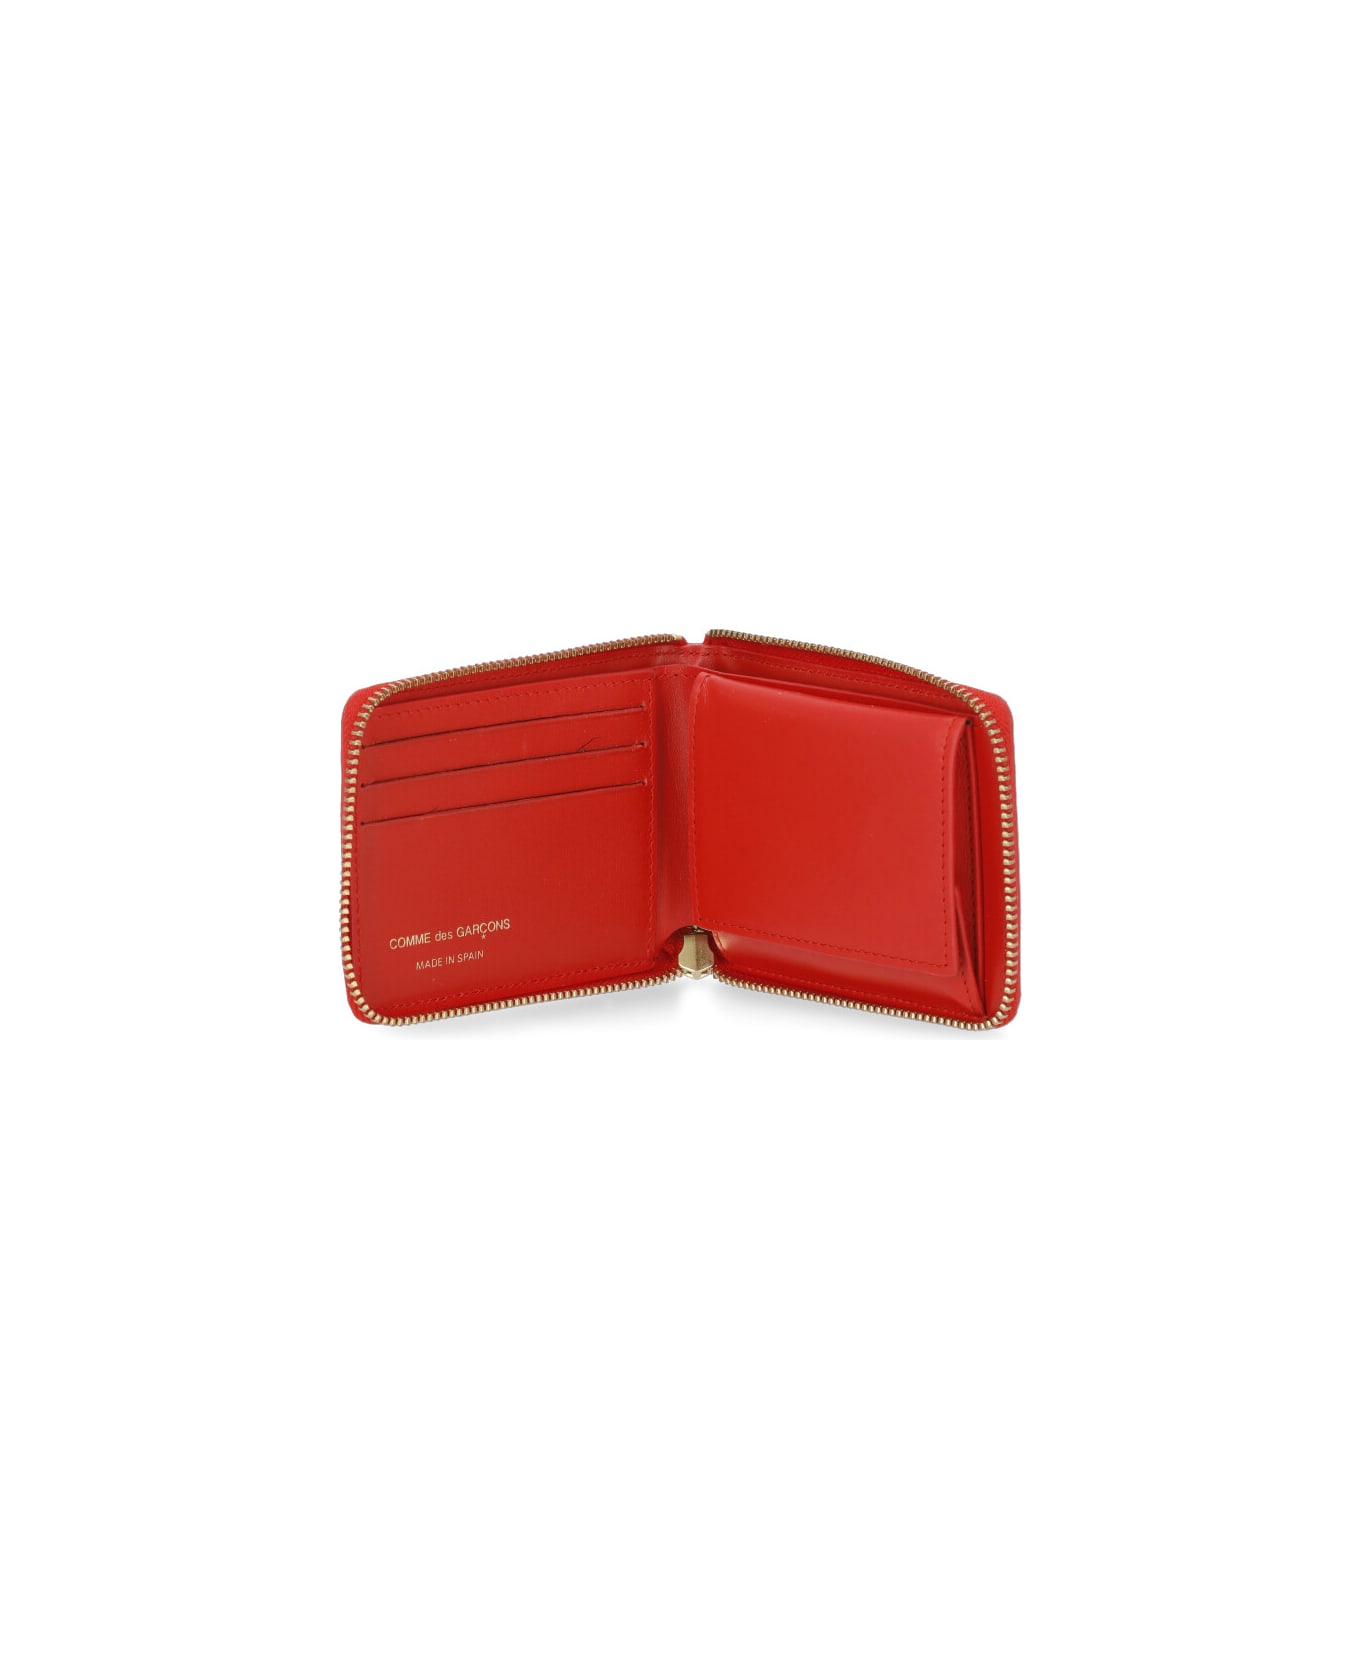 Comme des Garçons Wallet Leather Wallet - Red